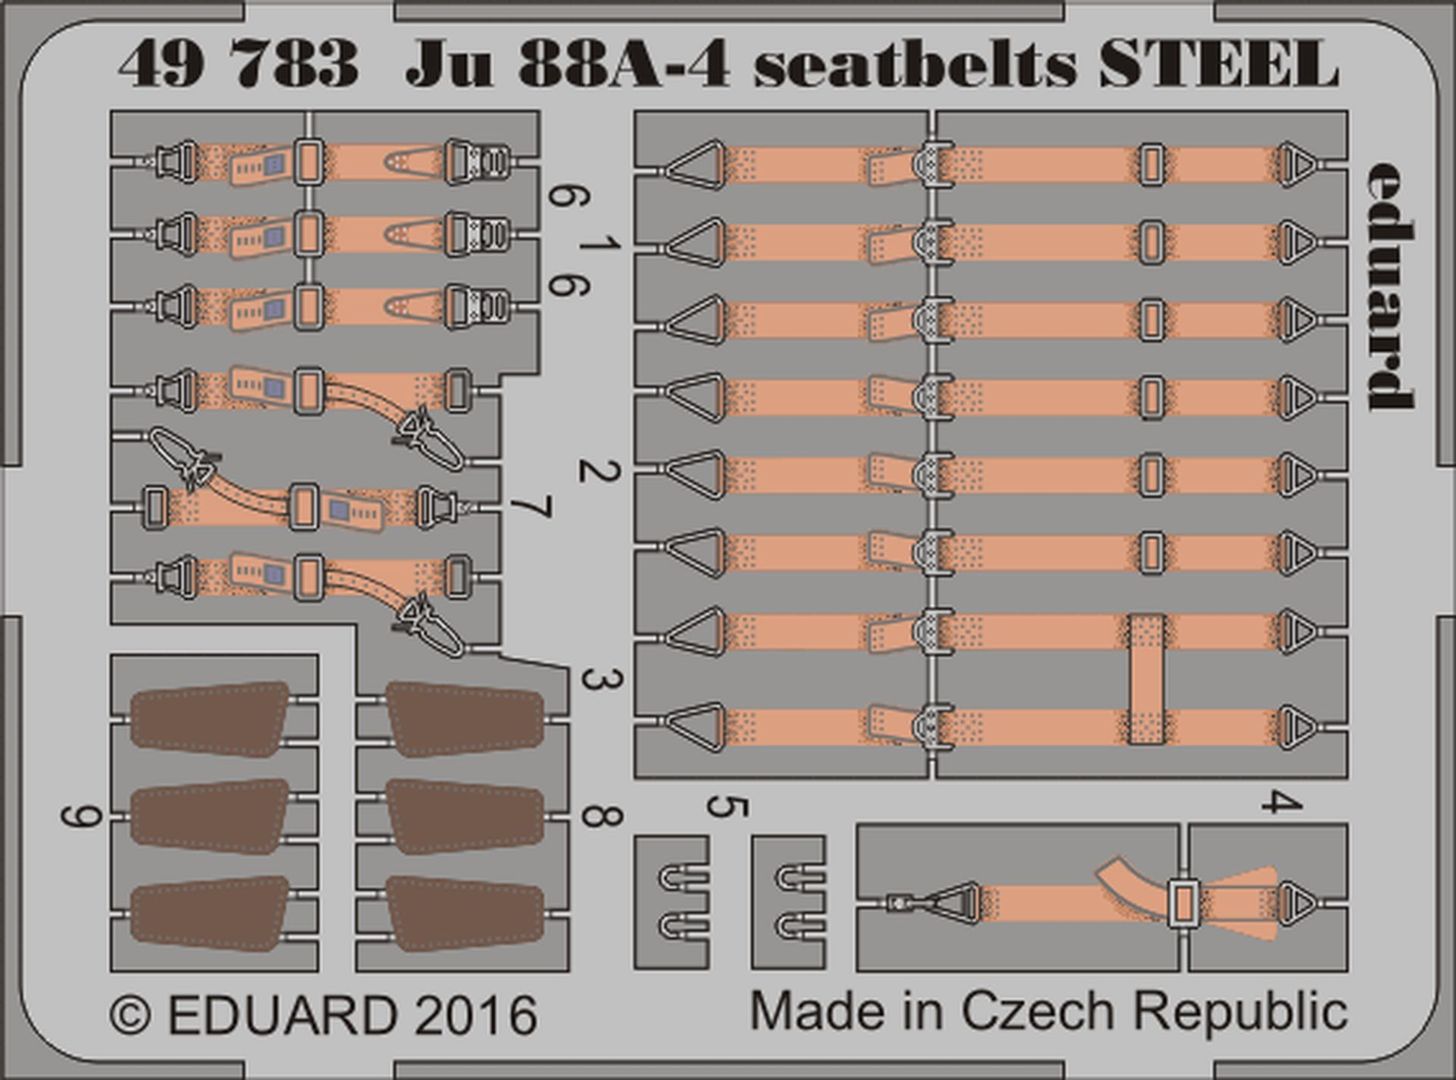 Eduard Edua49783 Ju 88A-4 seatbelts STEEL 1/48